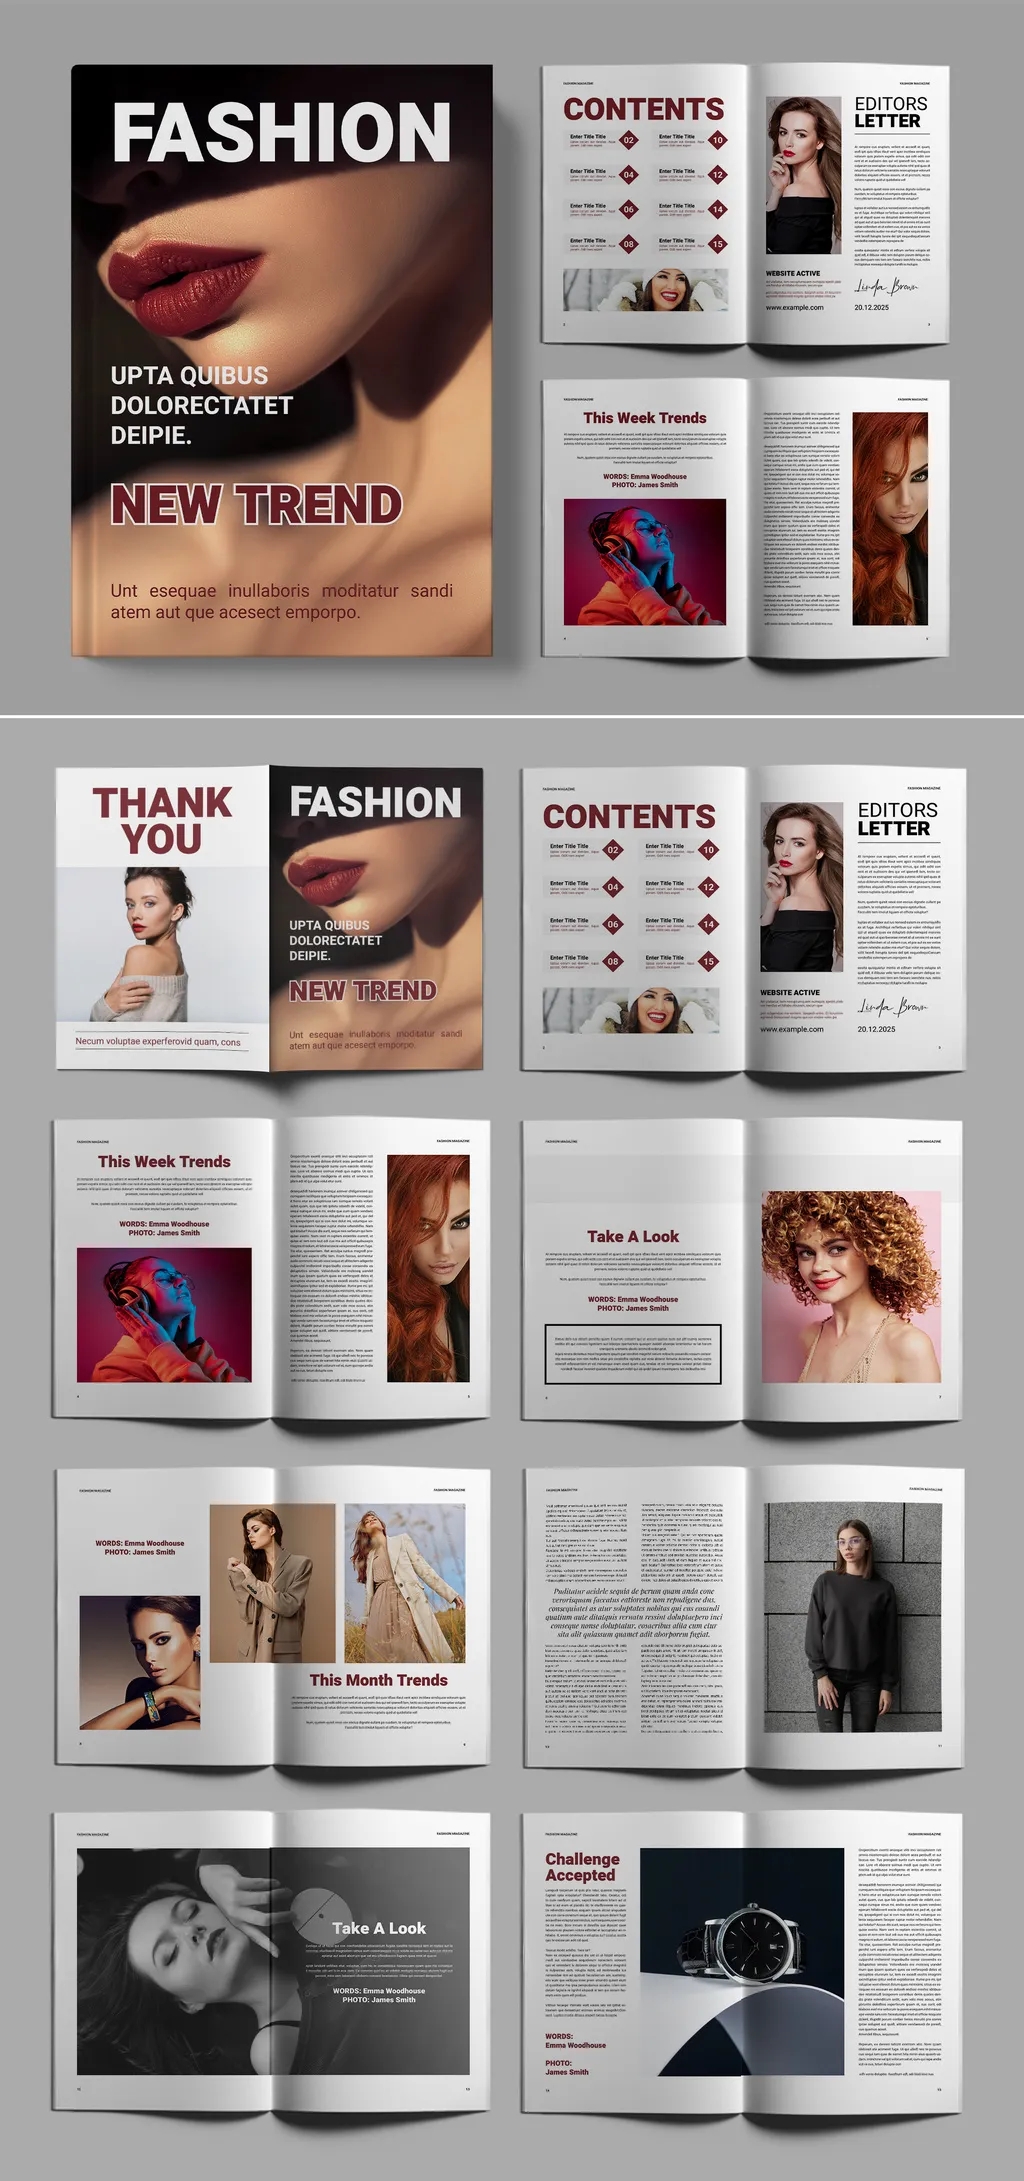 Adobestock - Creative Fashion Magazine 722994839